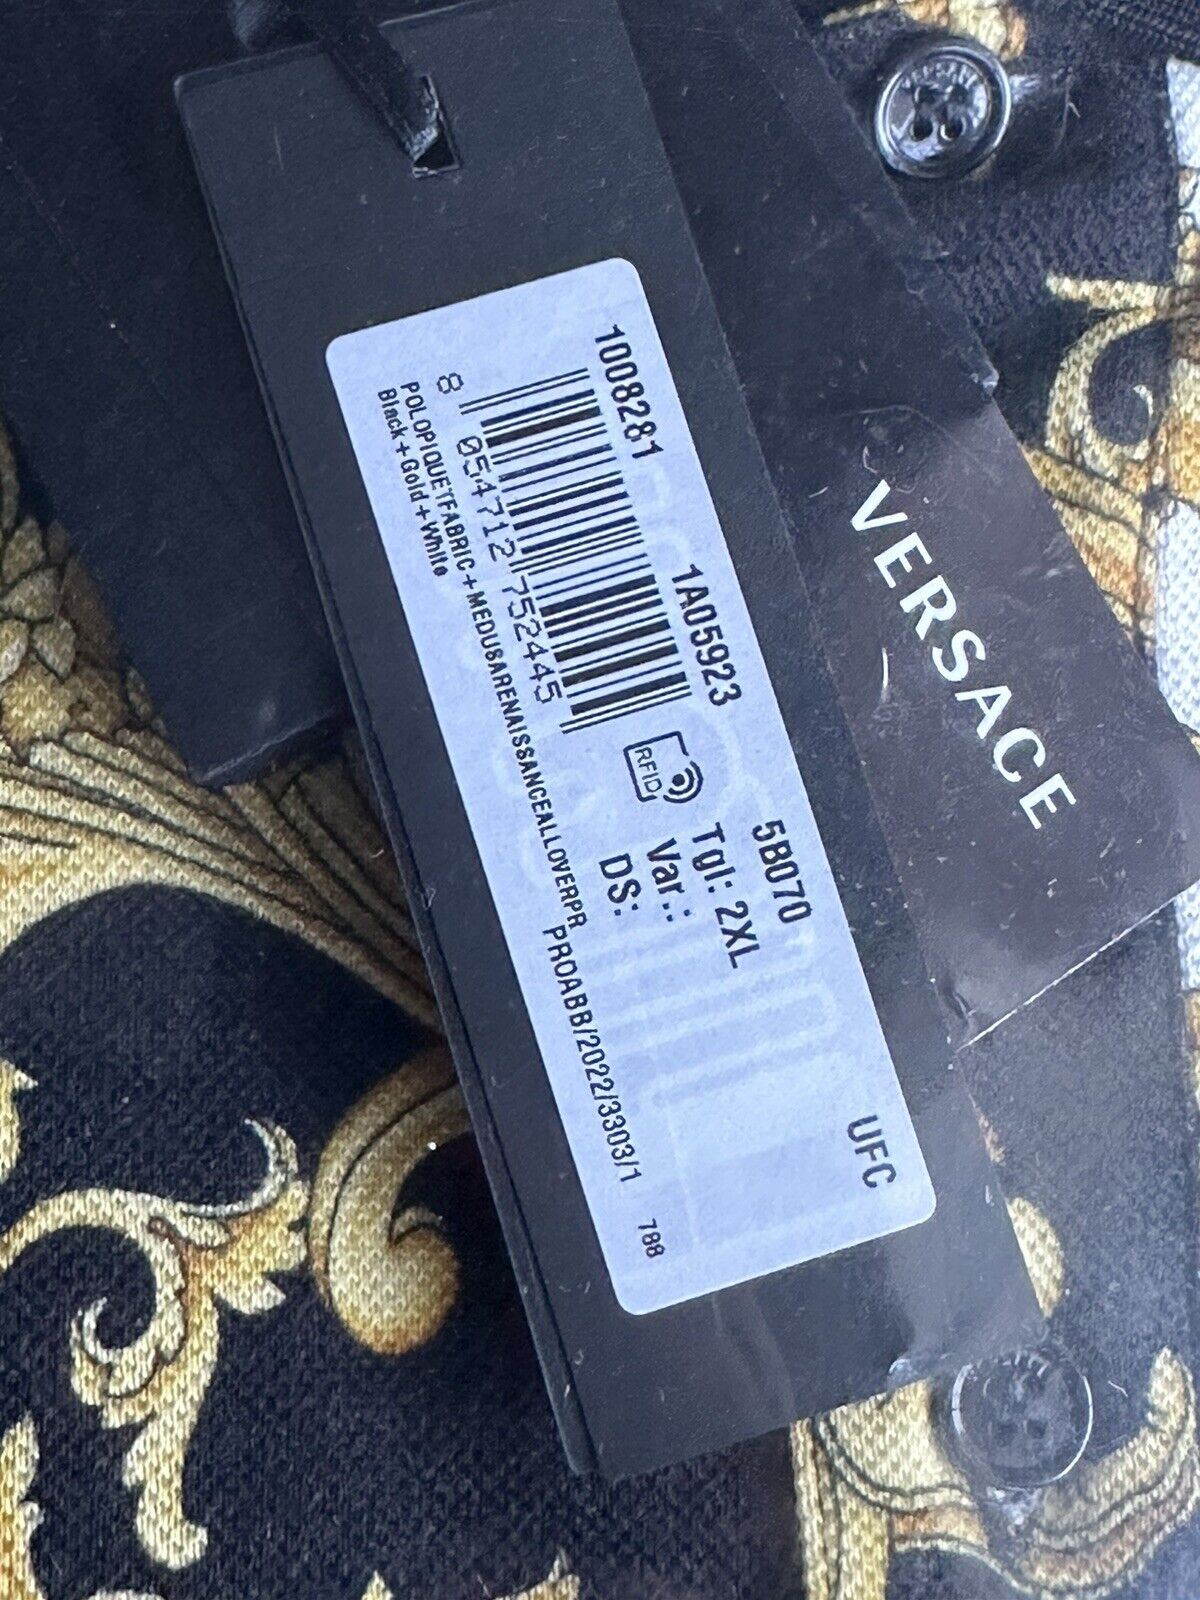 NWT $600 Versace Piquet Рубашка поло Medusa Renaissance из ткани 2XL 1008281